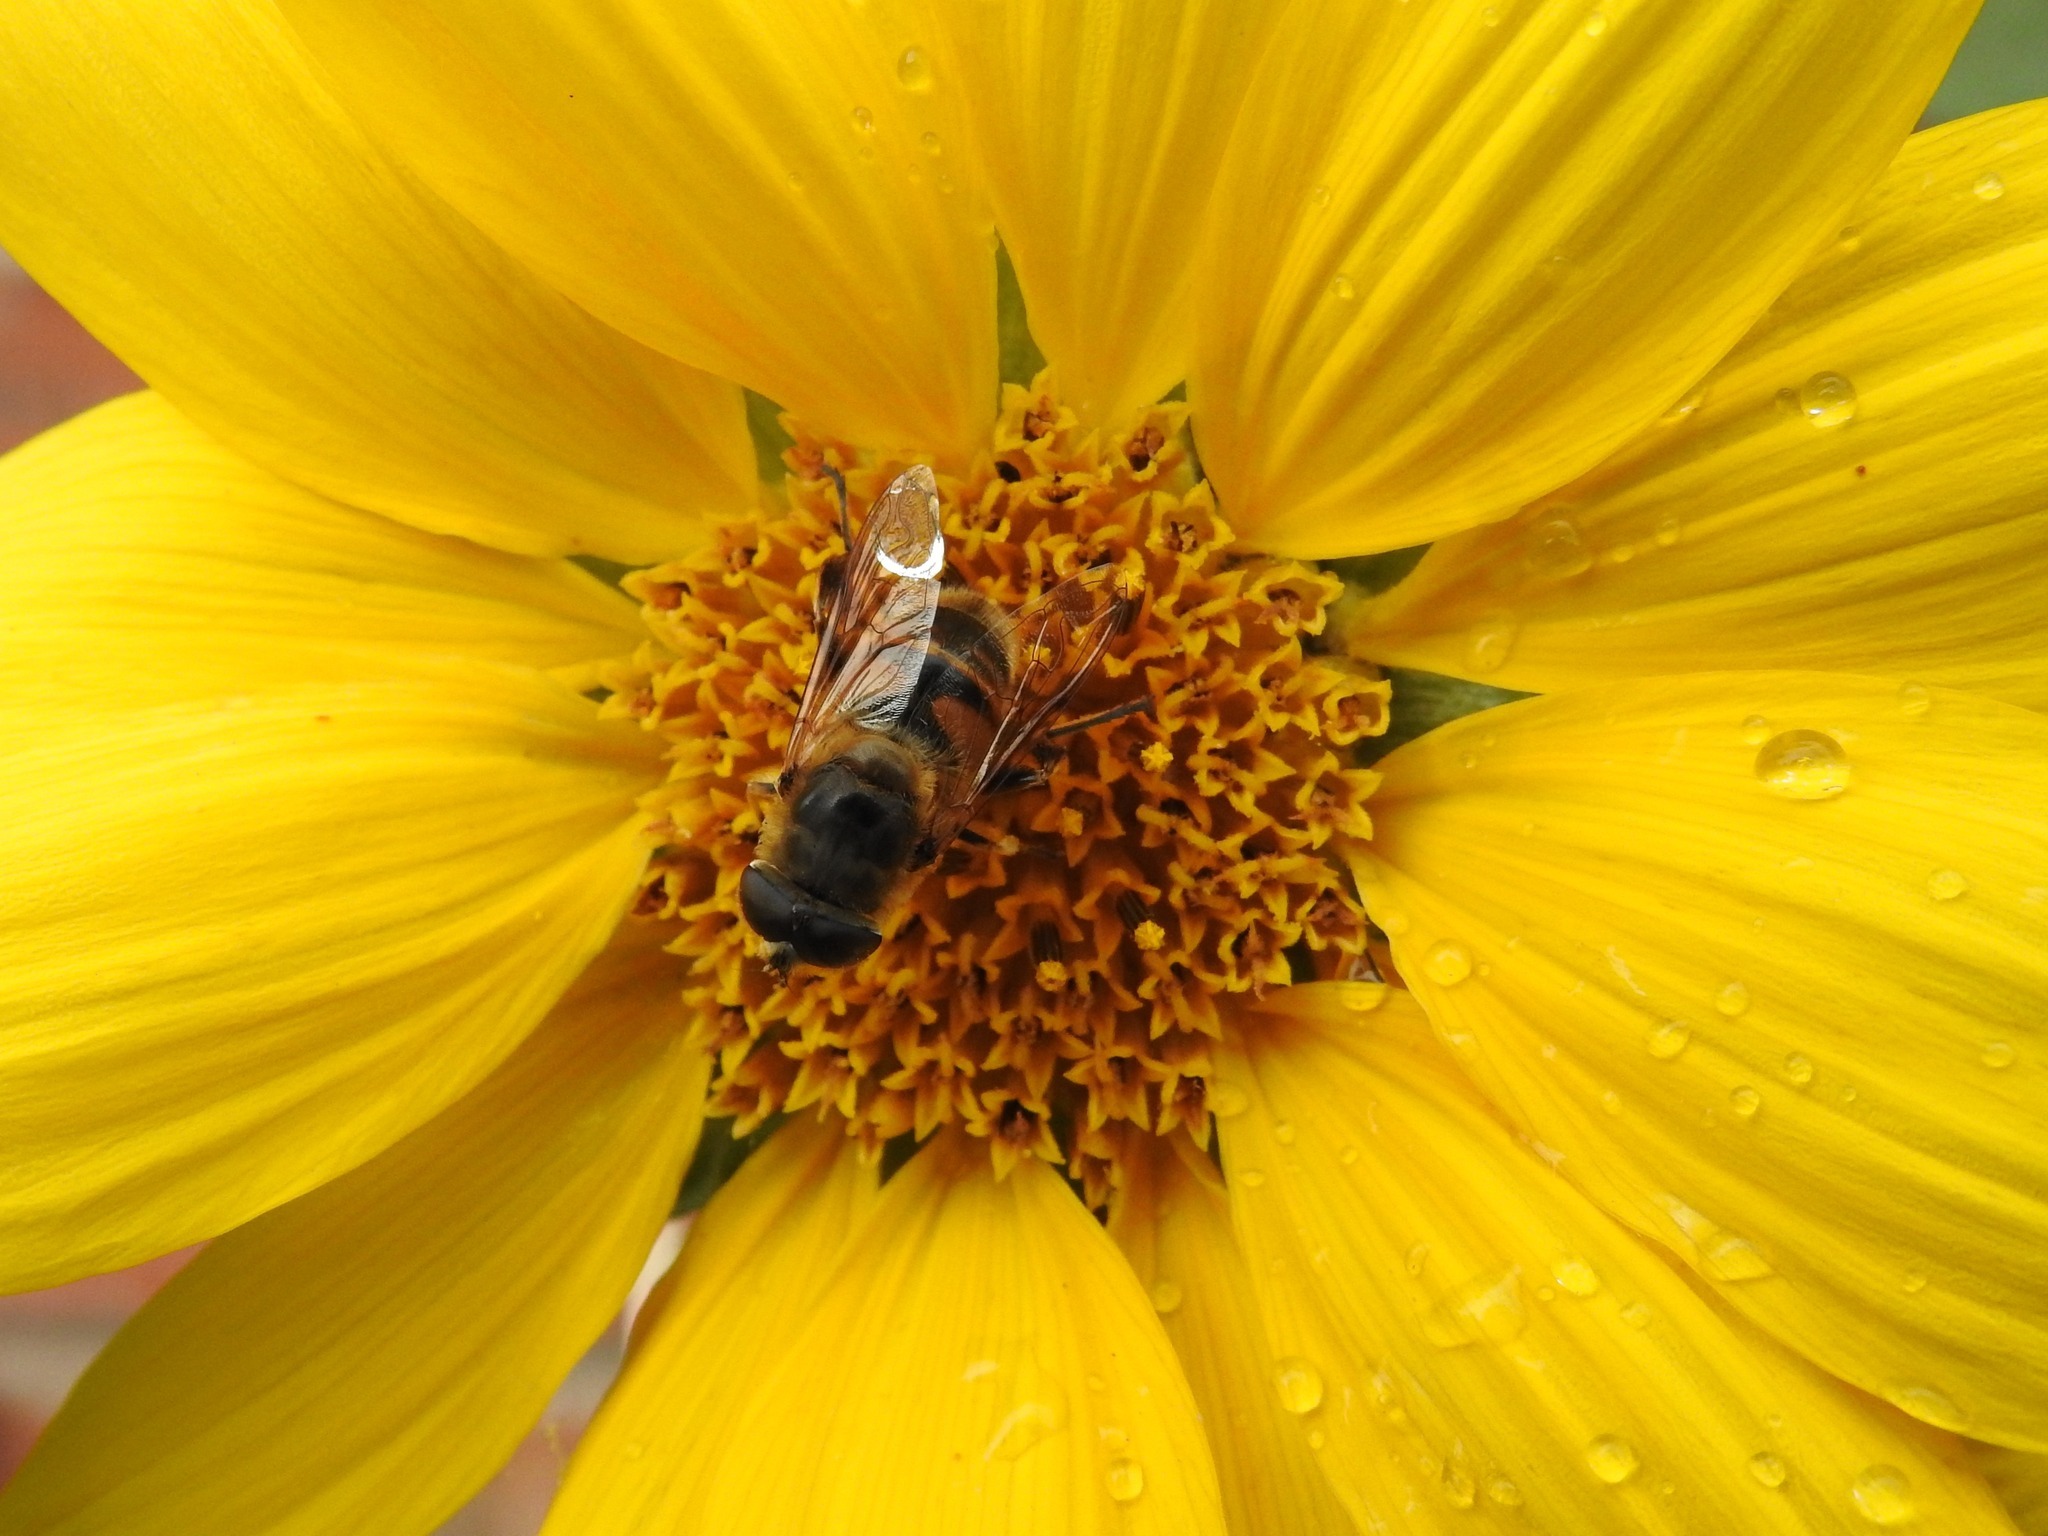 Raindrops on a bees win by Lynzi Blake